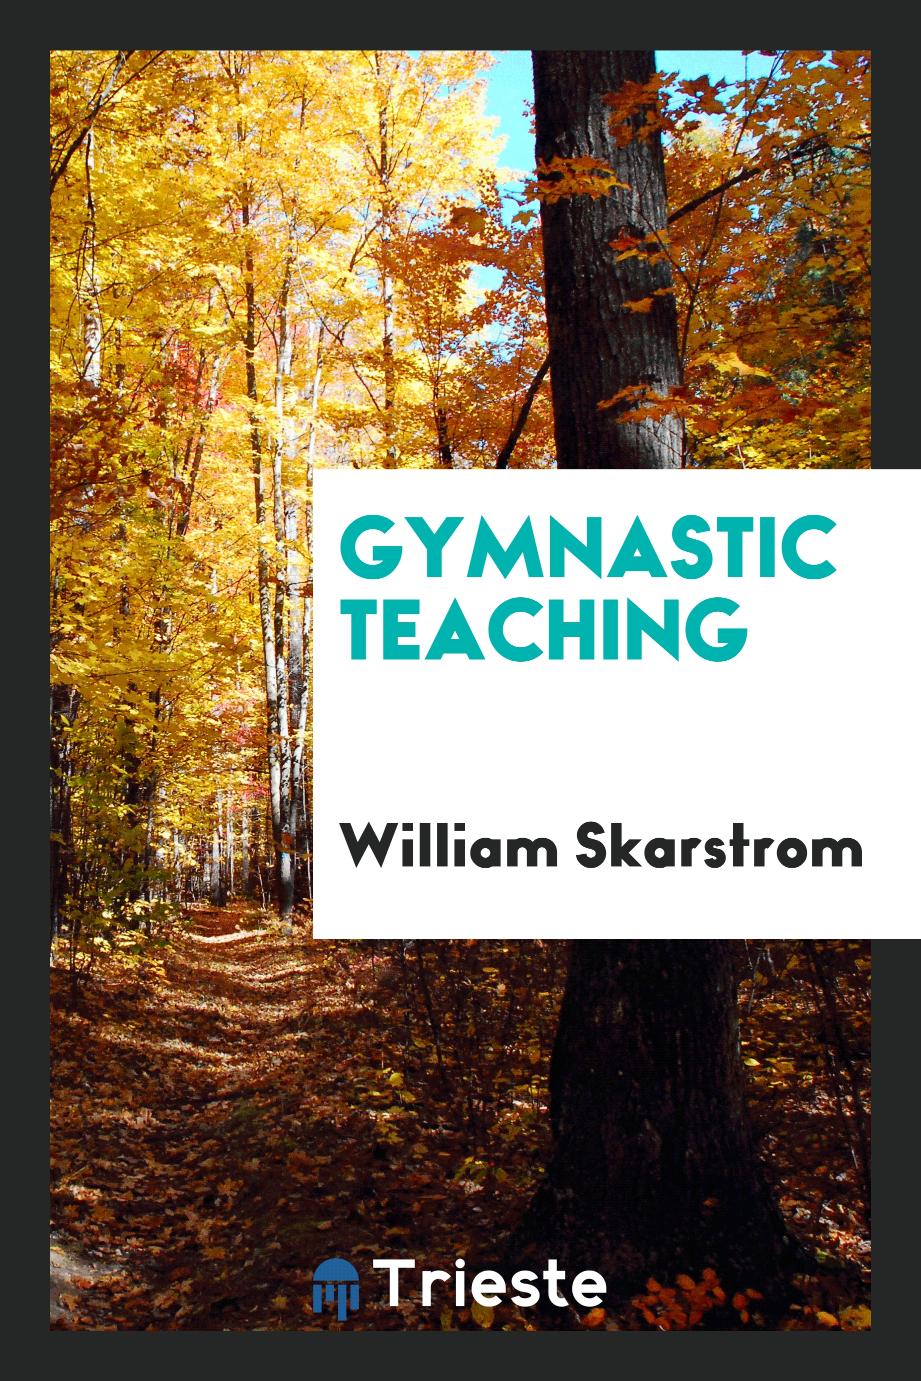 Gymnastic teaching